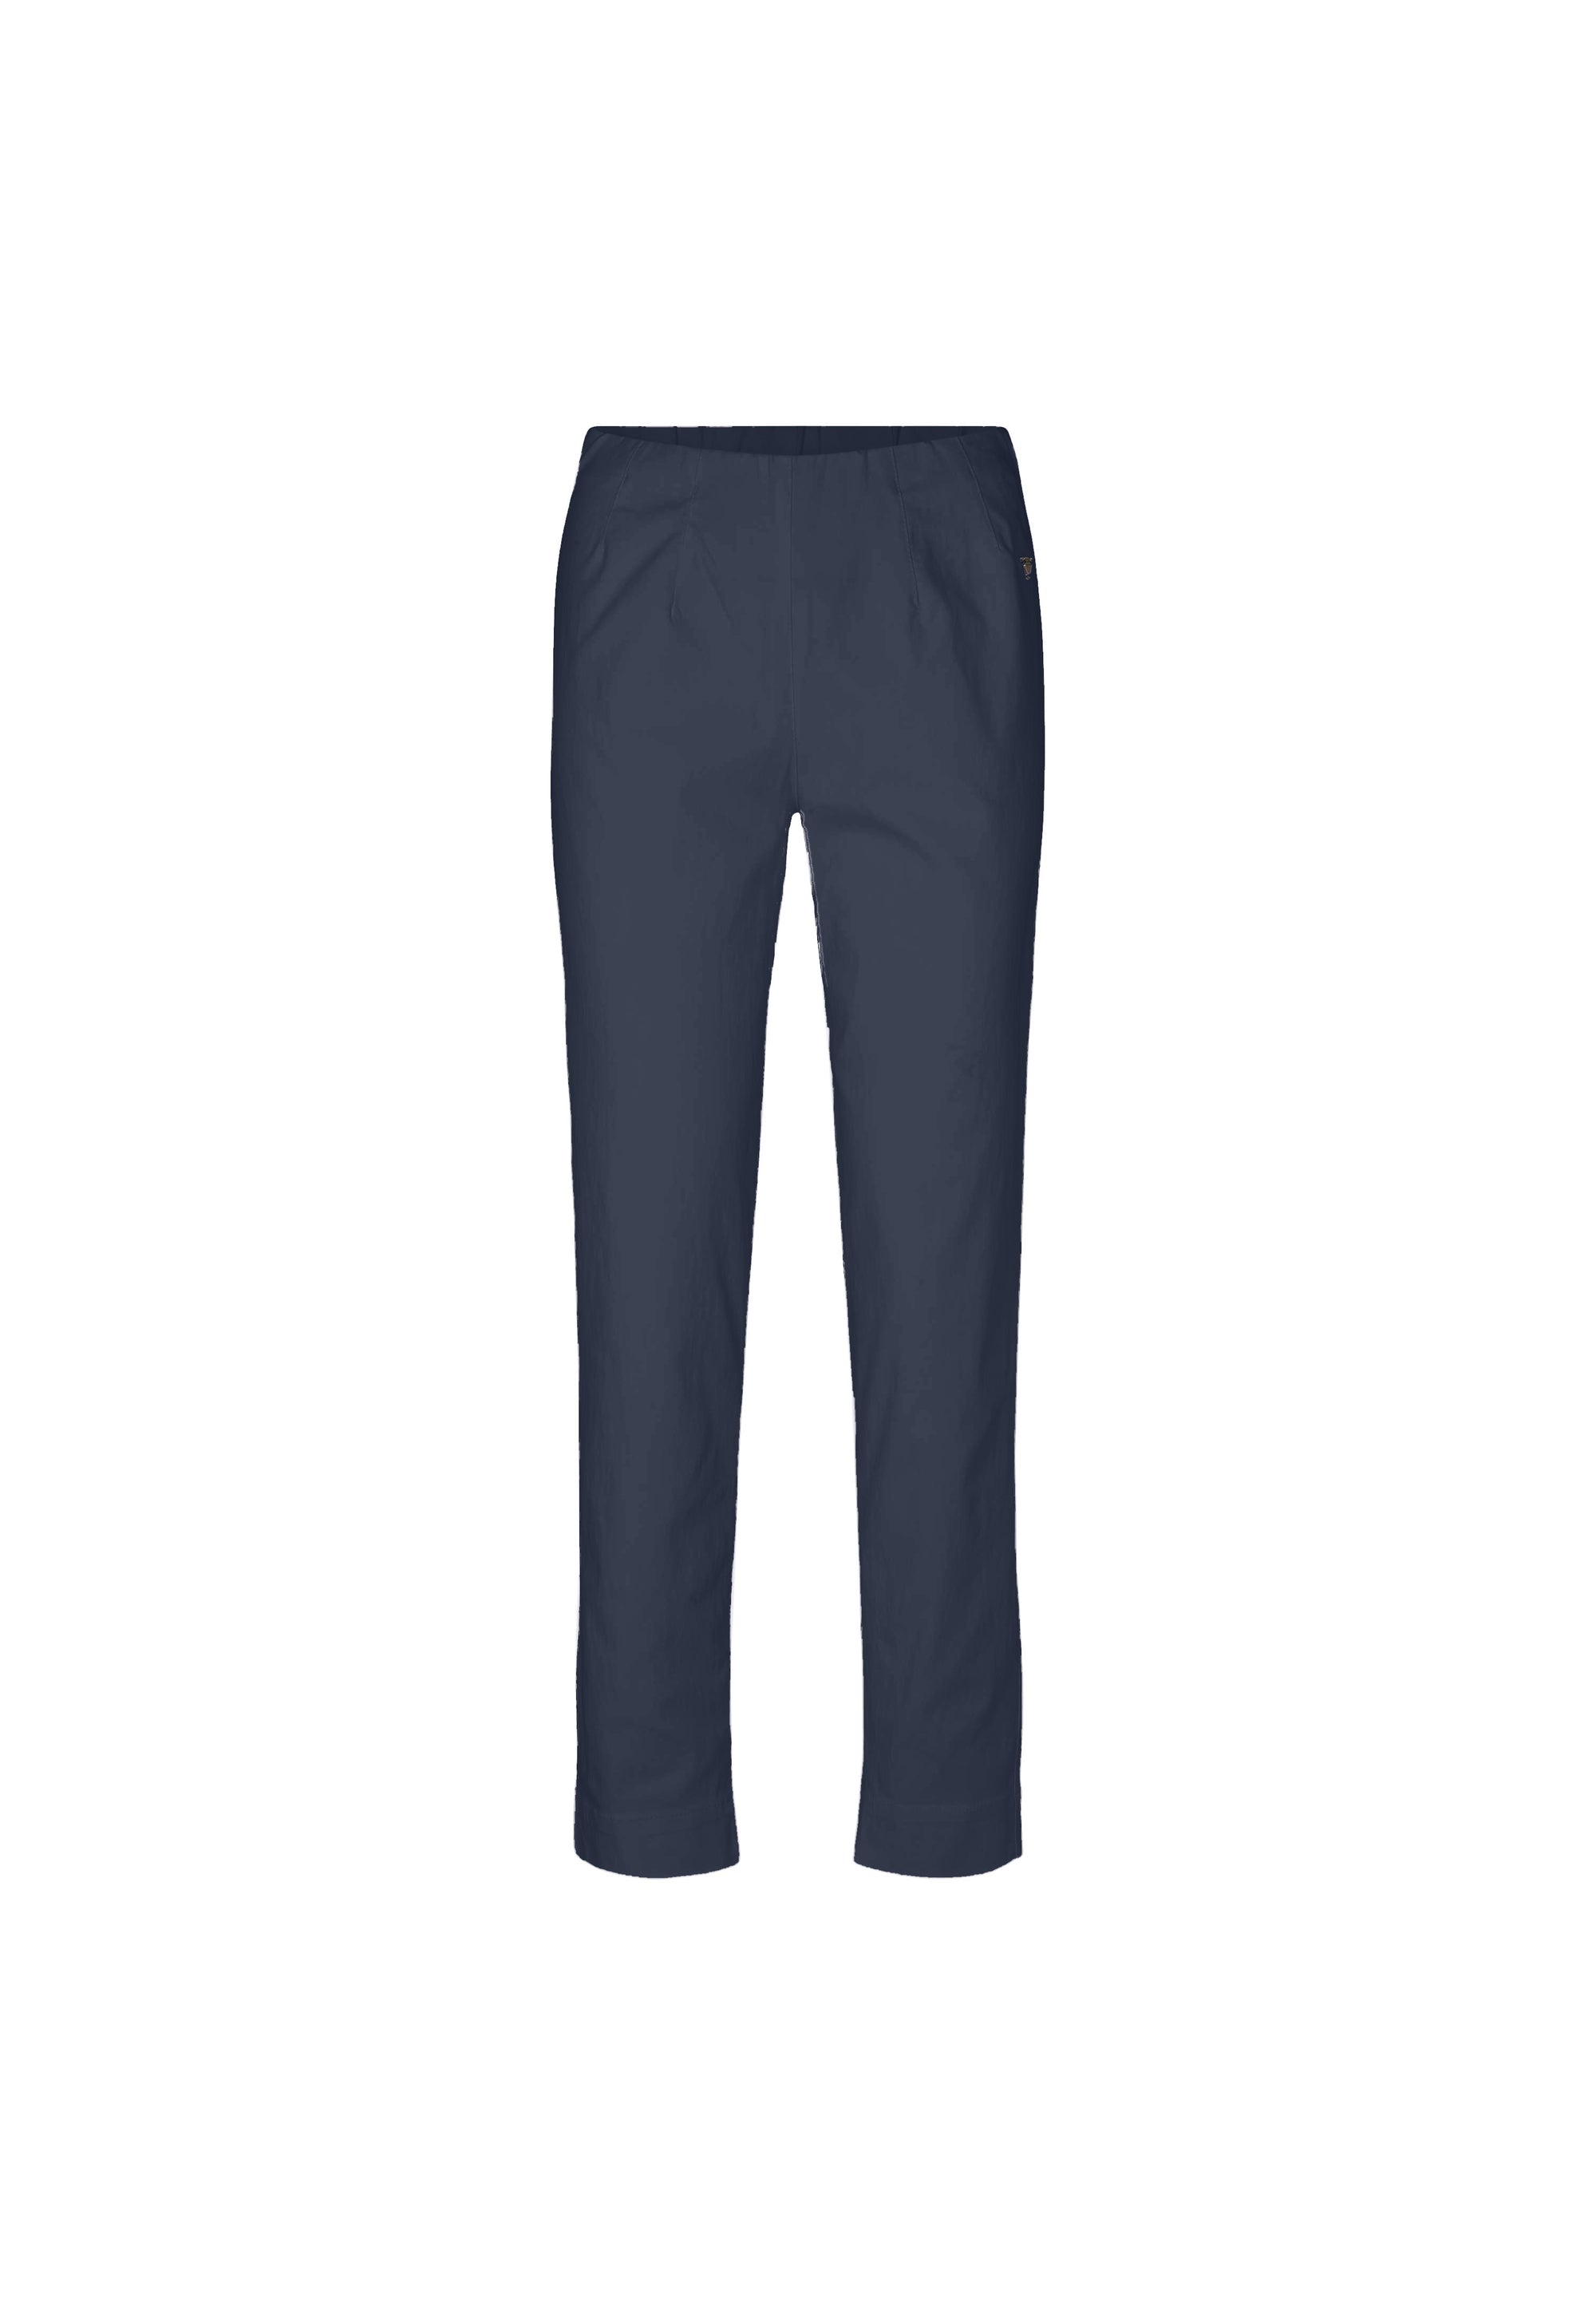 LAURIE Betty Regular - Short Length Trousers REGULAR 49970 Navy